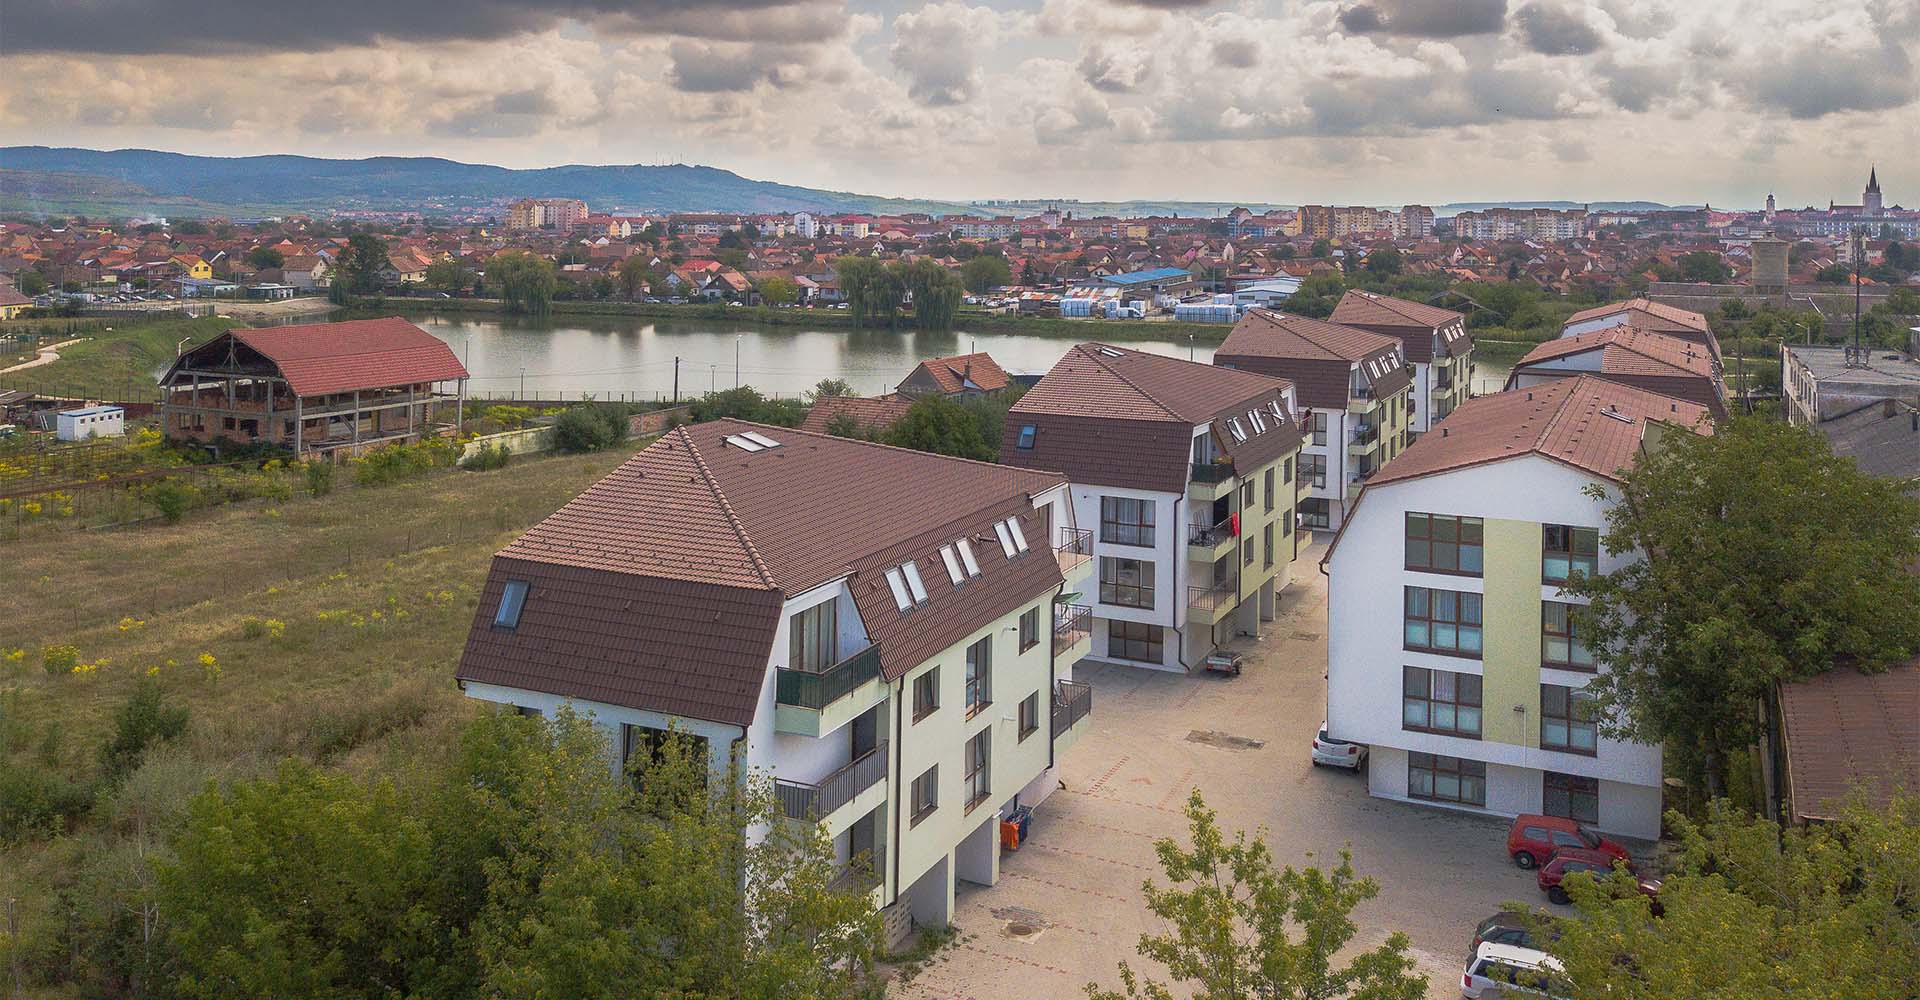 Lake Residence, Sibiu (72 apartments)